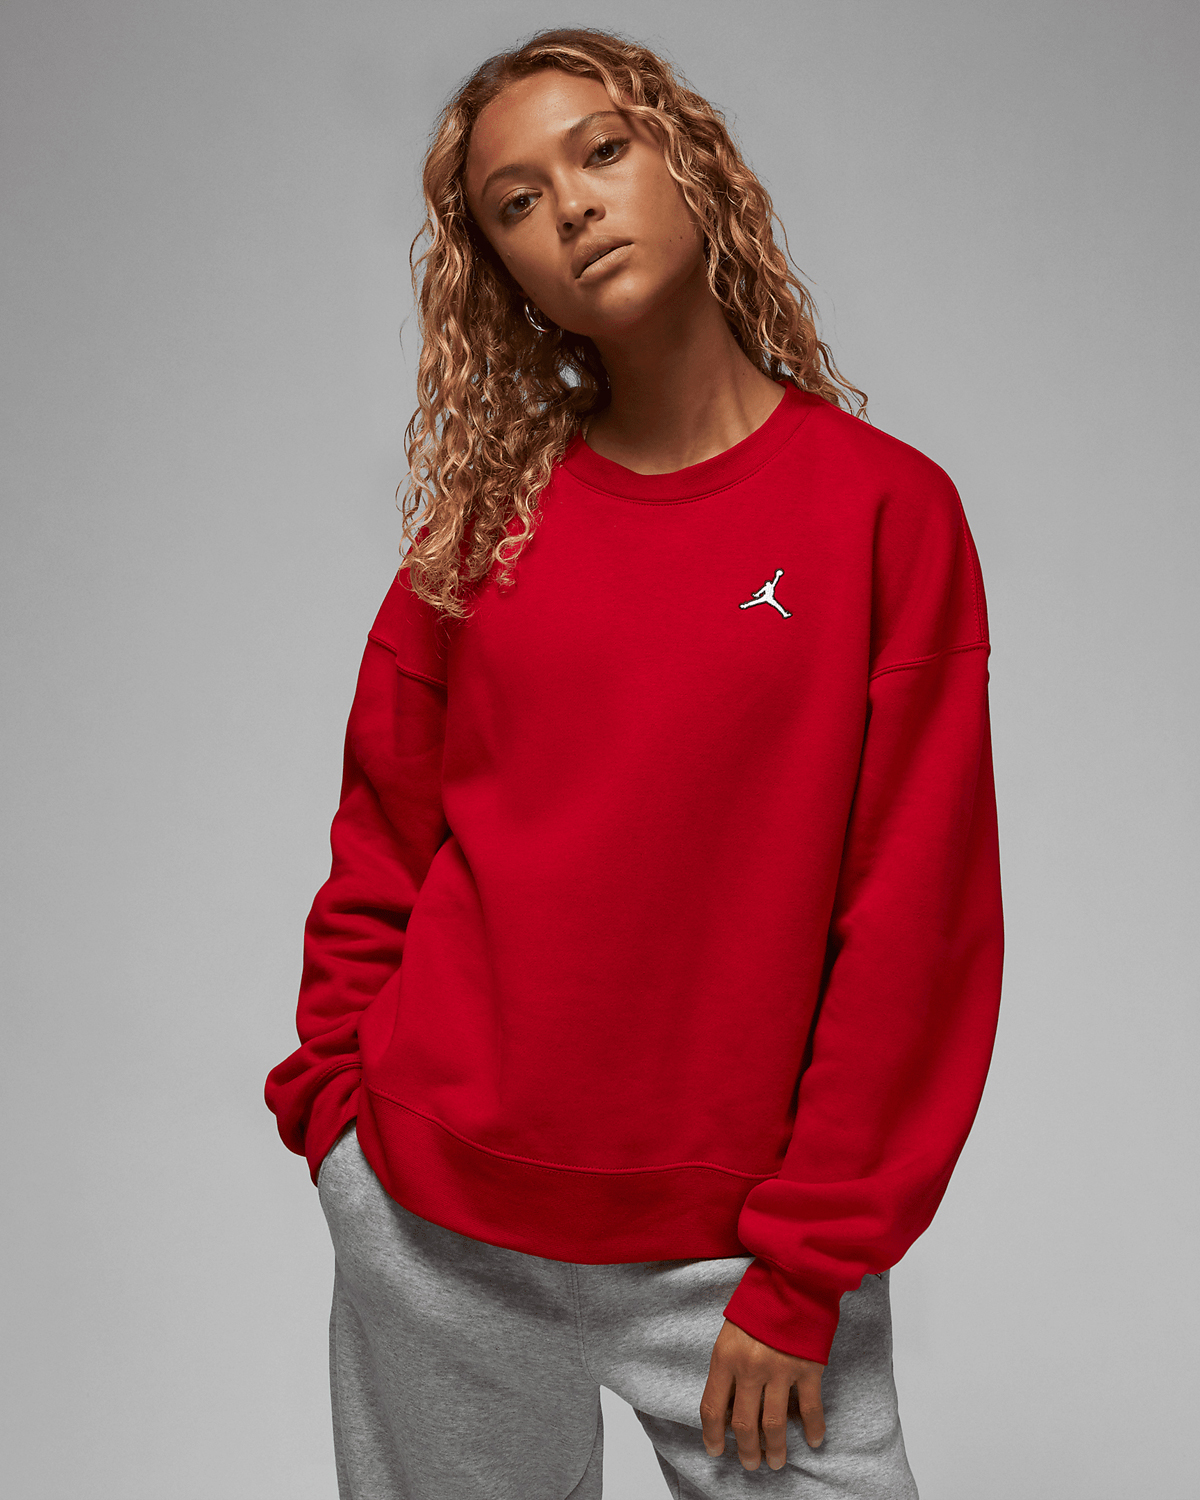 Jordan-Brooklyn-Womens-Sweatshirt-Gym-Red